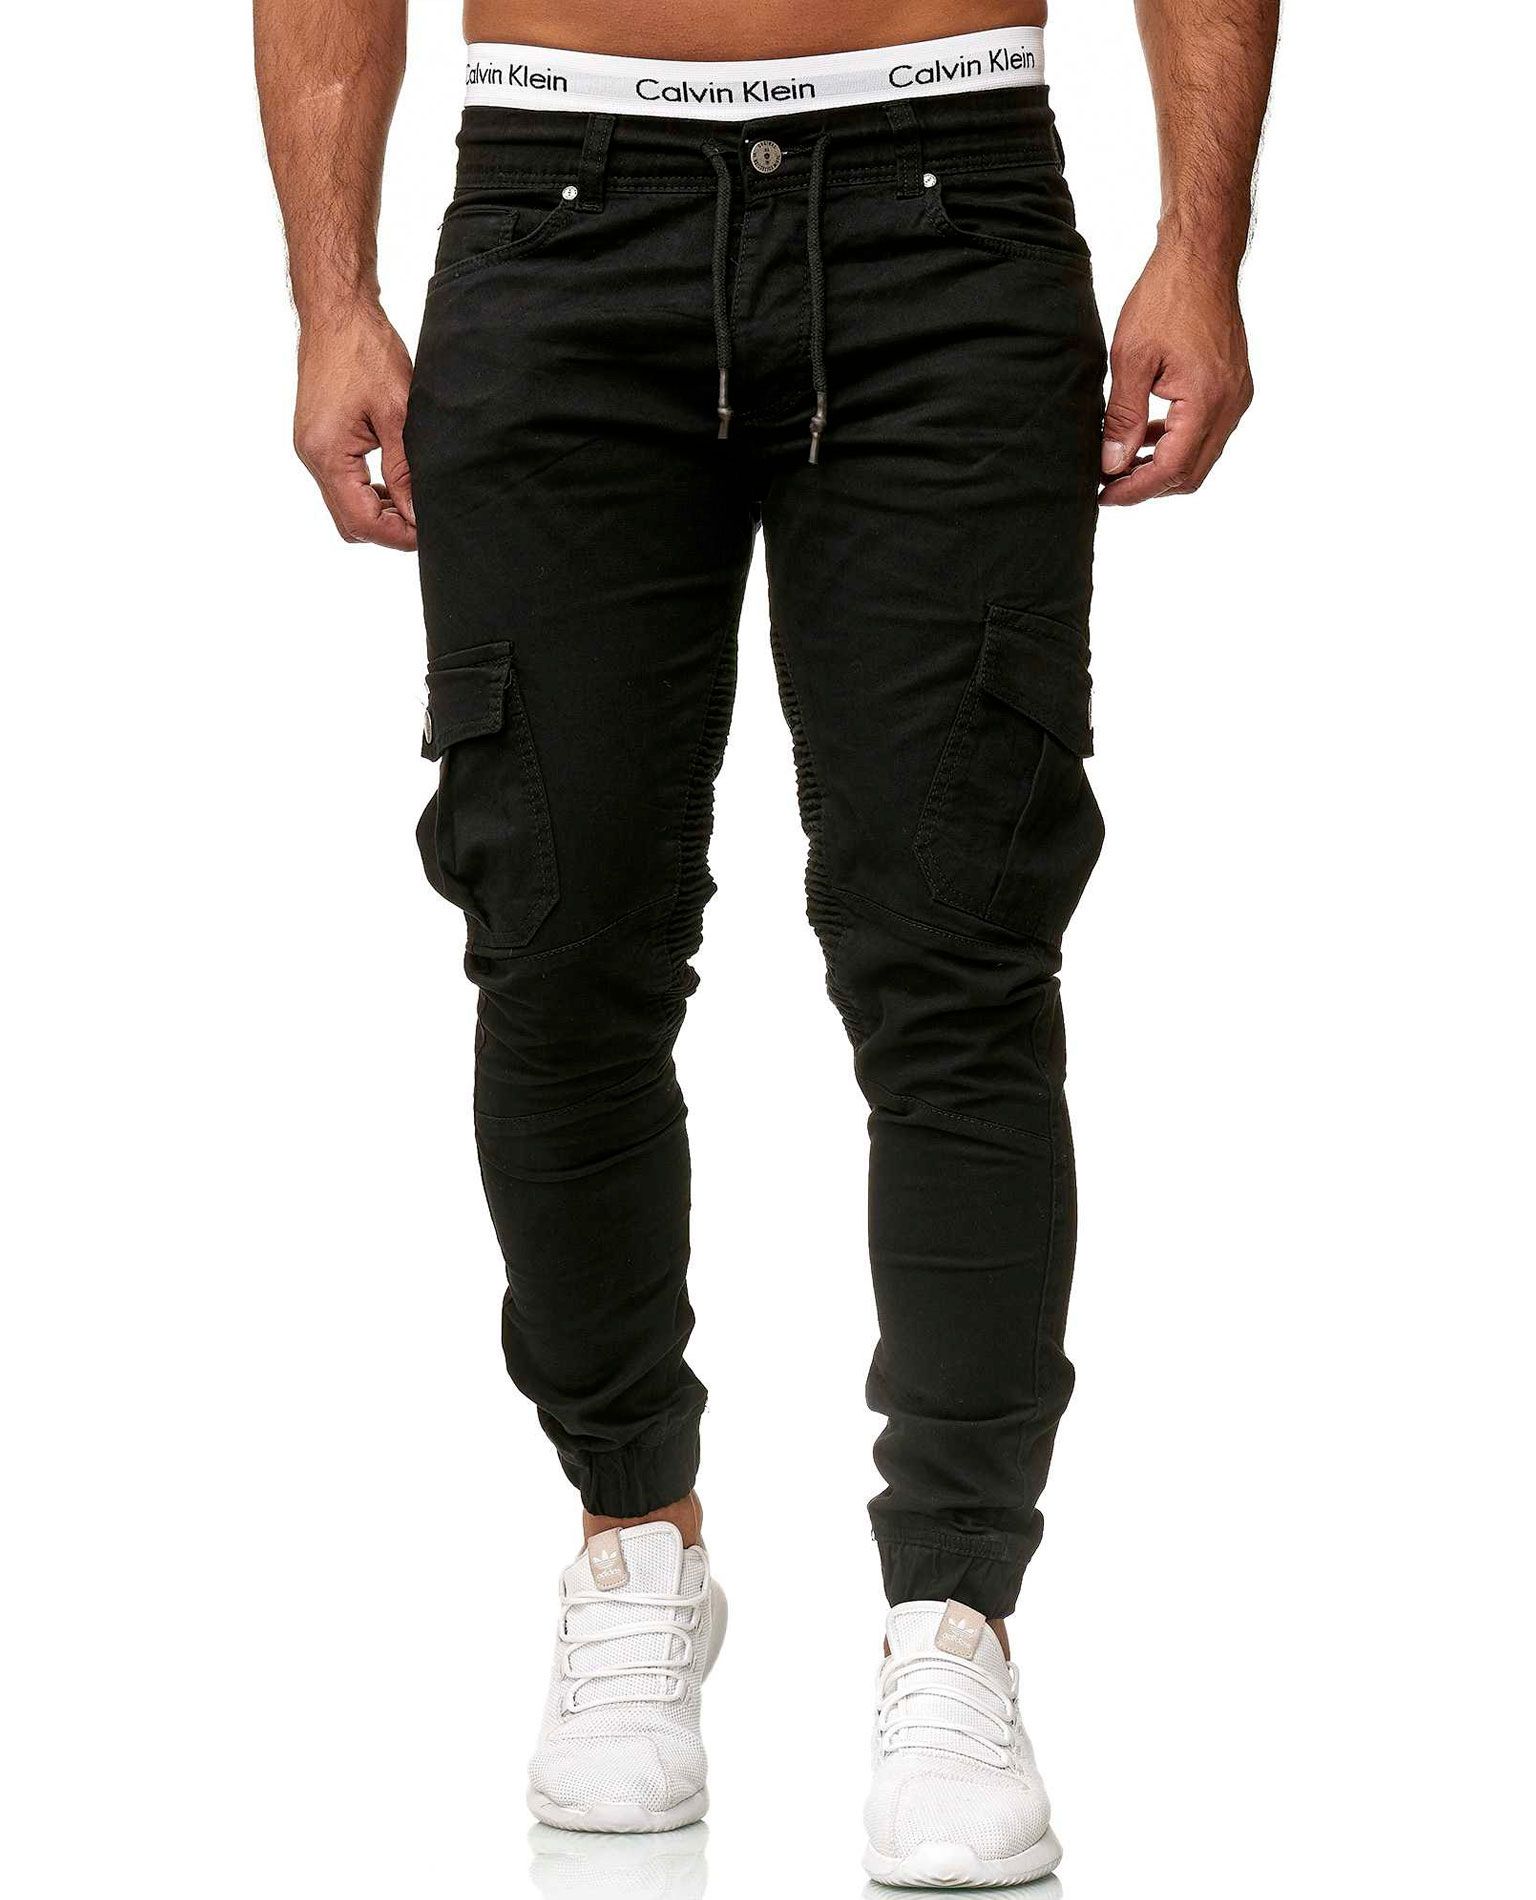 Mike Black Pants L32 Jerone - 3207 - Jeans - Jerone.com